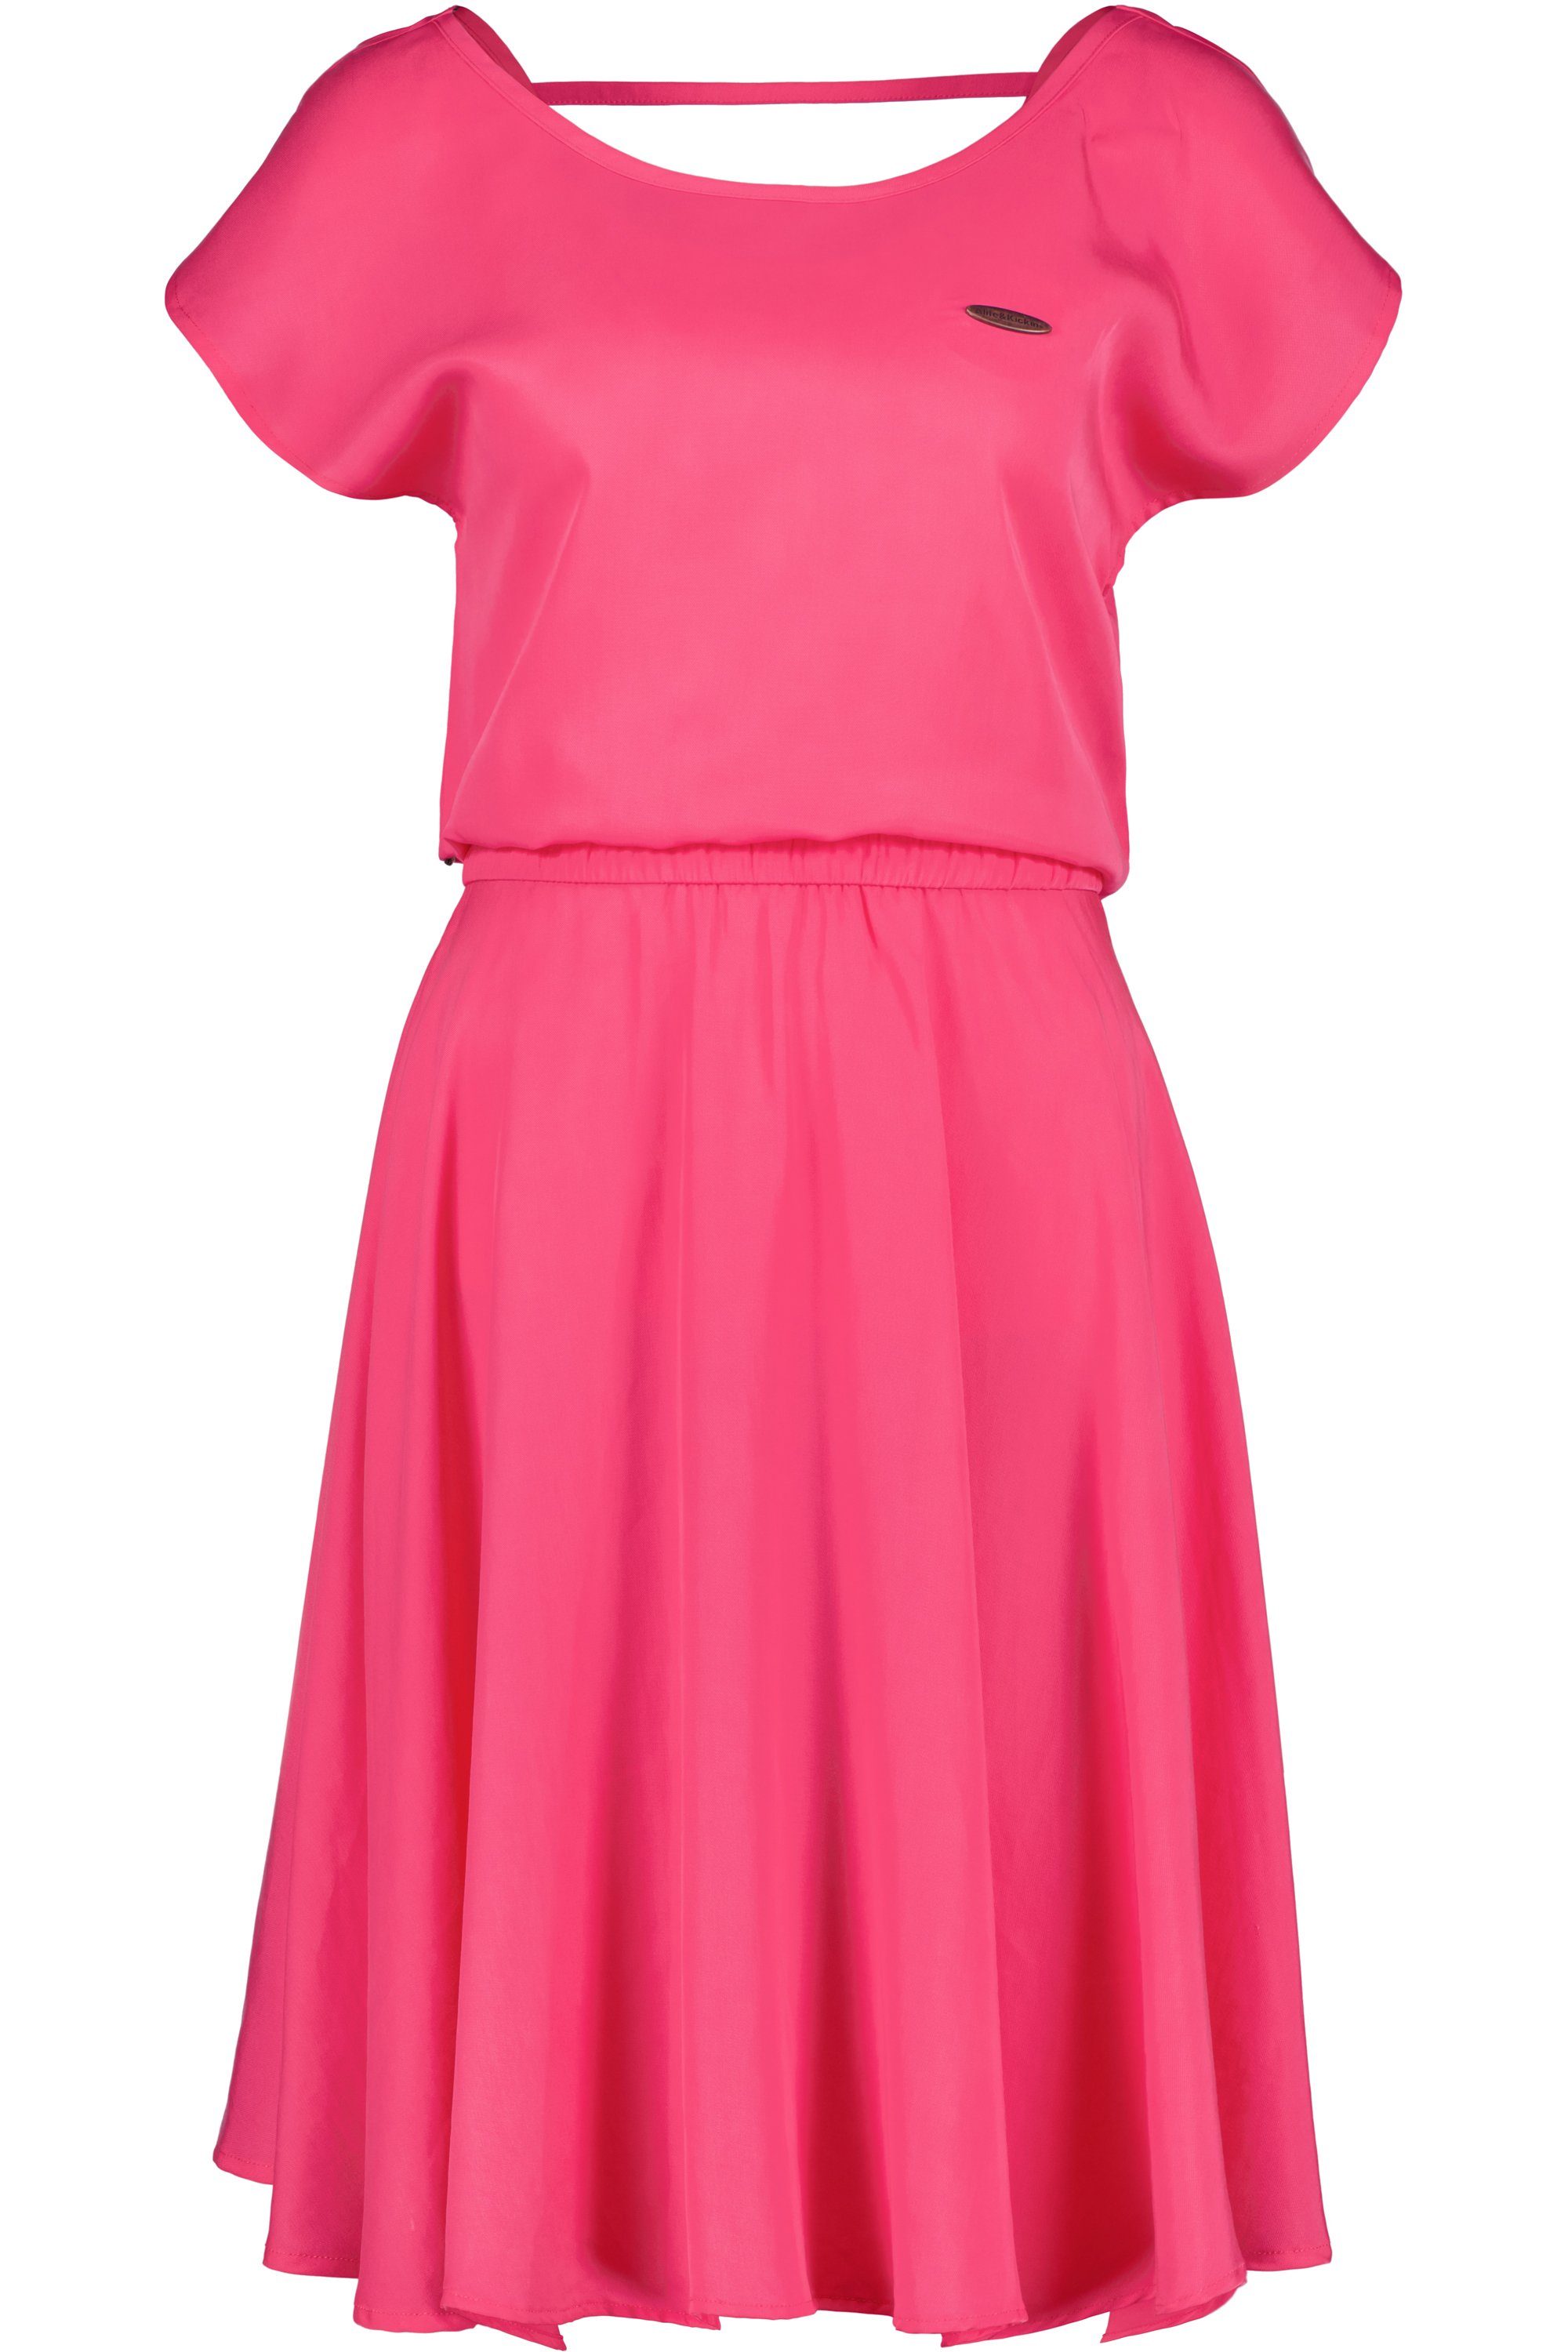 Alife & Kickin Jerseykleid Sommerkleid, IsabellaAK flamingo Dress Damen Kleid